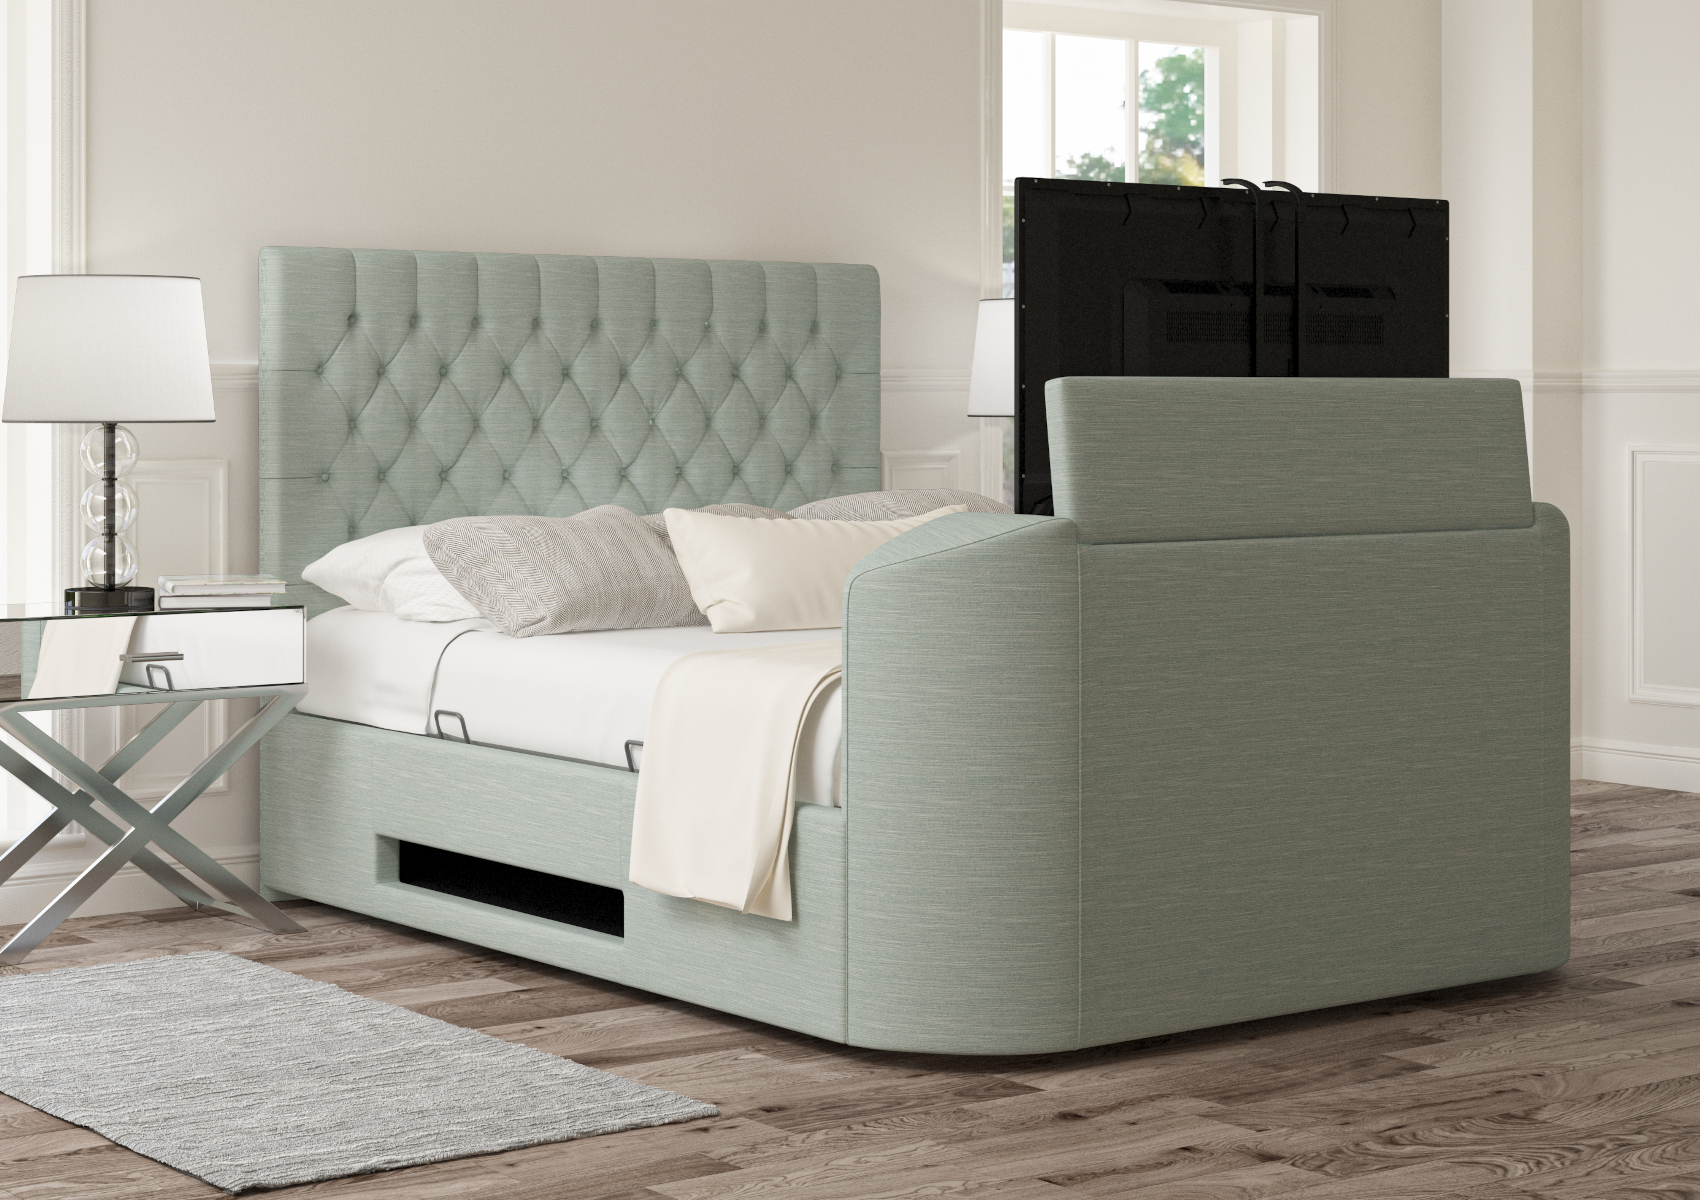 View Claridge Linea SeaBlue Upholstered King Size Multifunctional Ottoman Smart TV Bed Time4Sleep information